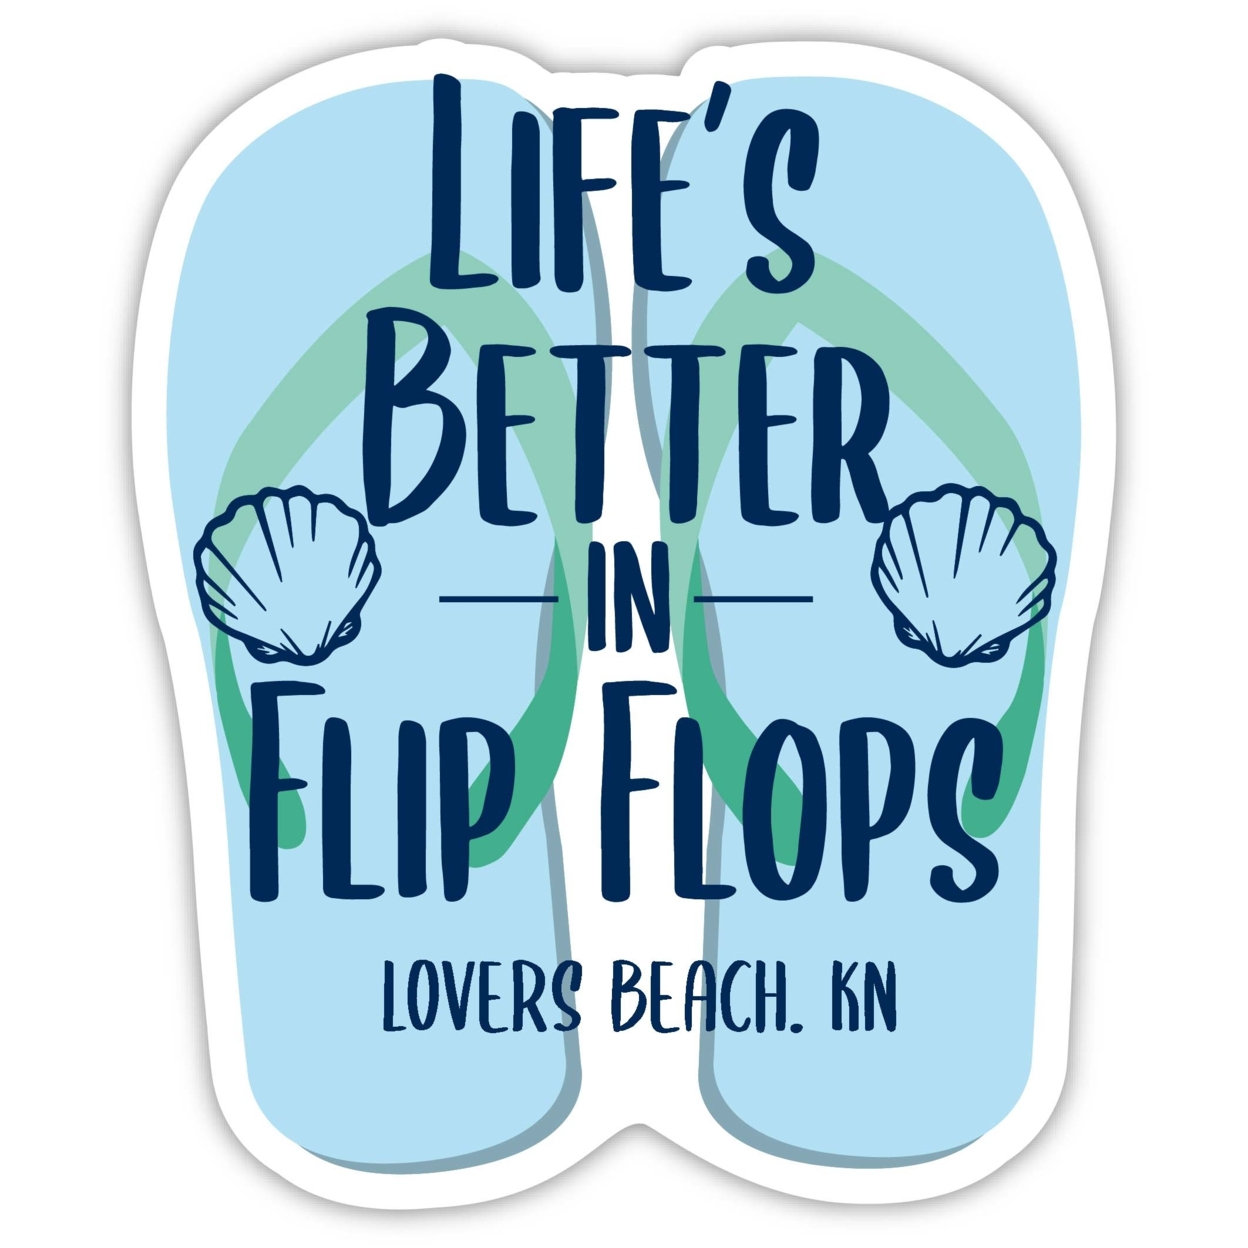 Lovers Beach St. Kitts & Nevis Souvenir 4 Inch Vinyl Decal Sticker Flip Flop Design